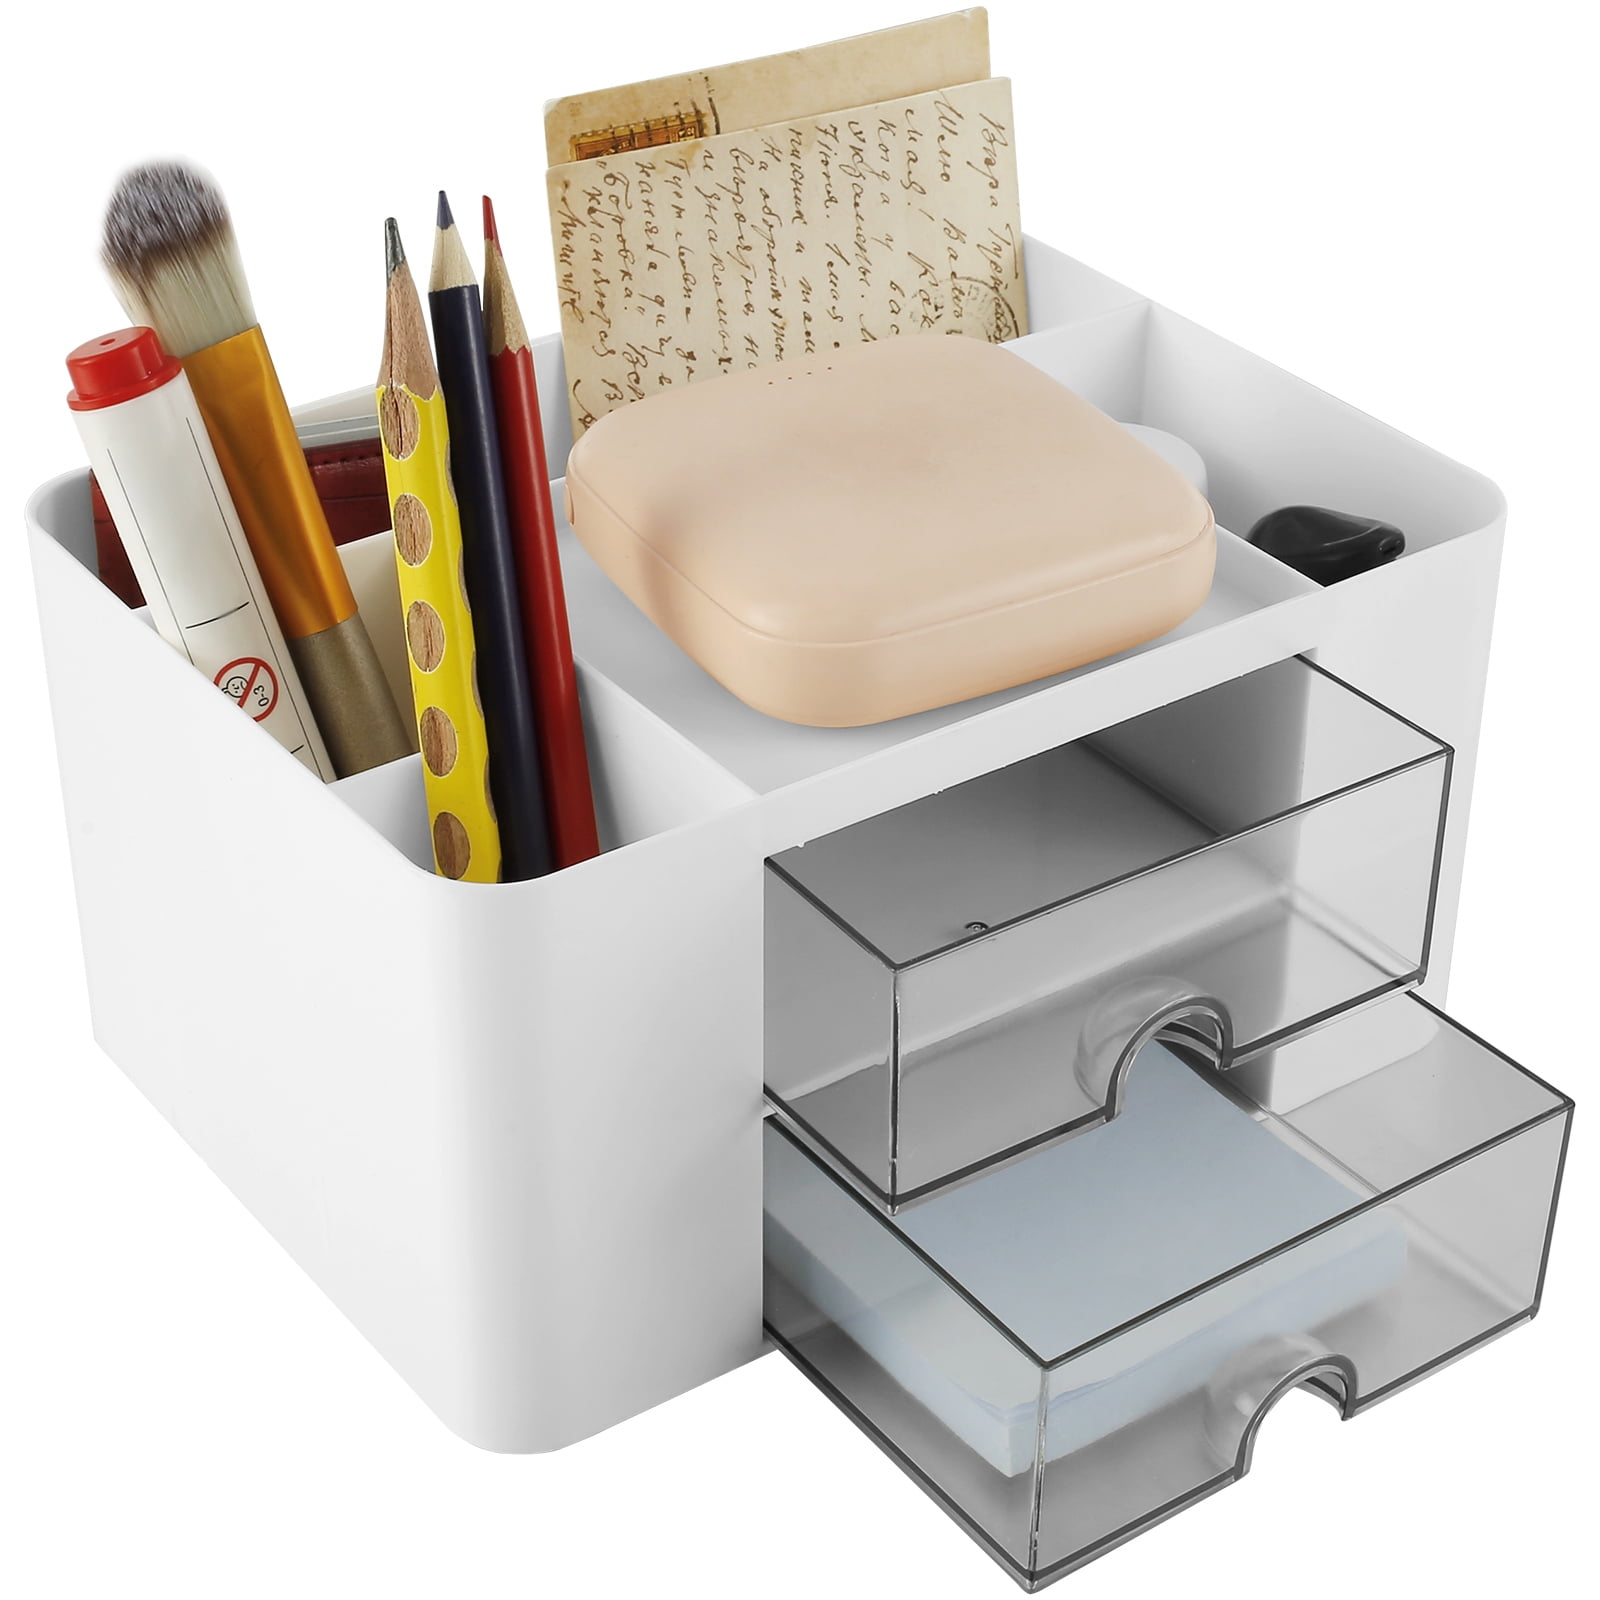 AUPSEN Desk Organizer Mesh Office Supplies Desk Accessories Features 5 Compartments + 1 Mini Sliding Drawer(White)